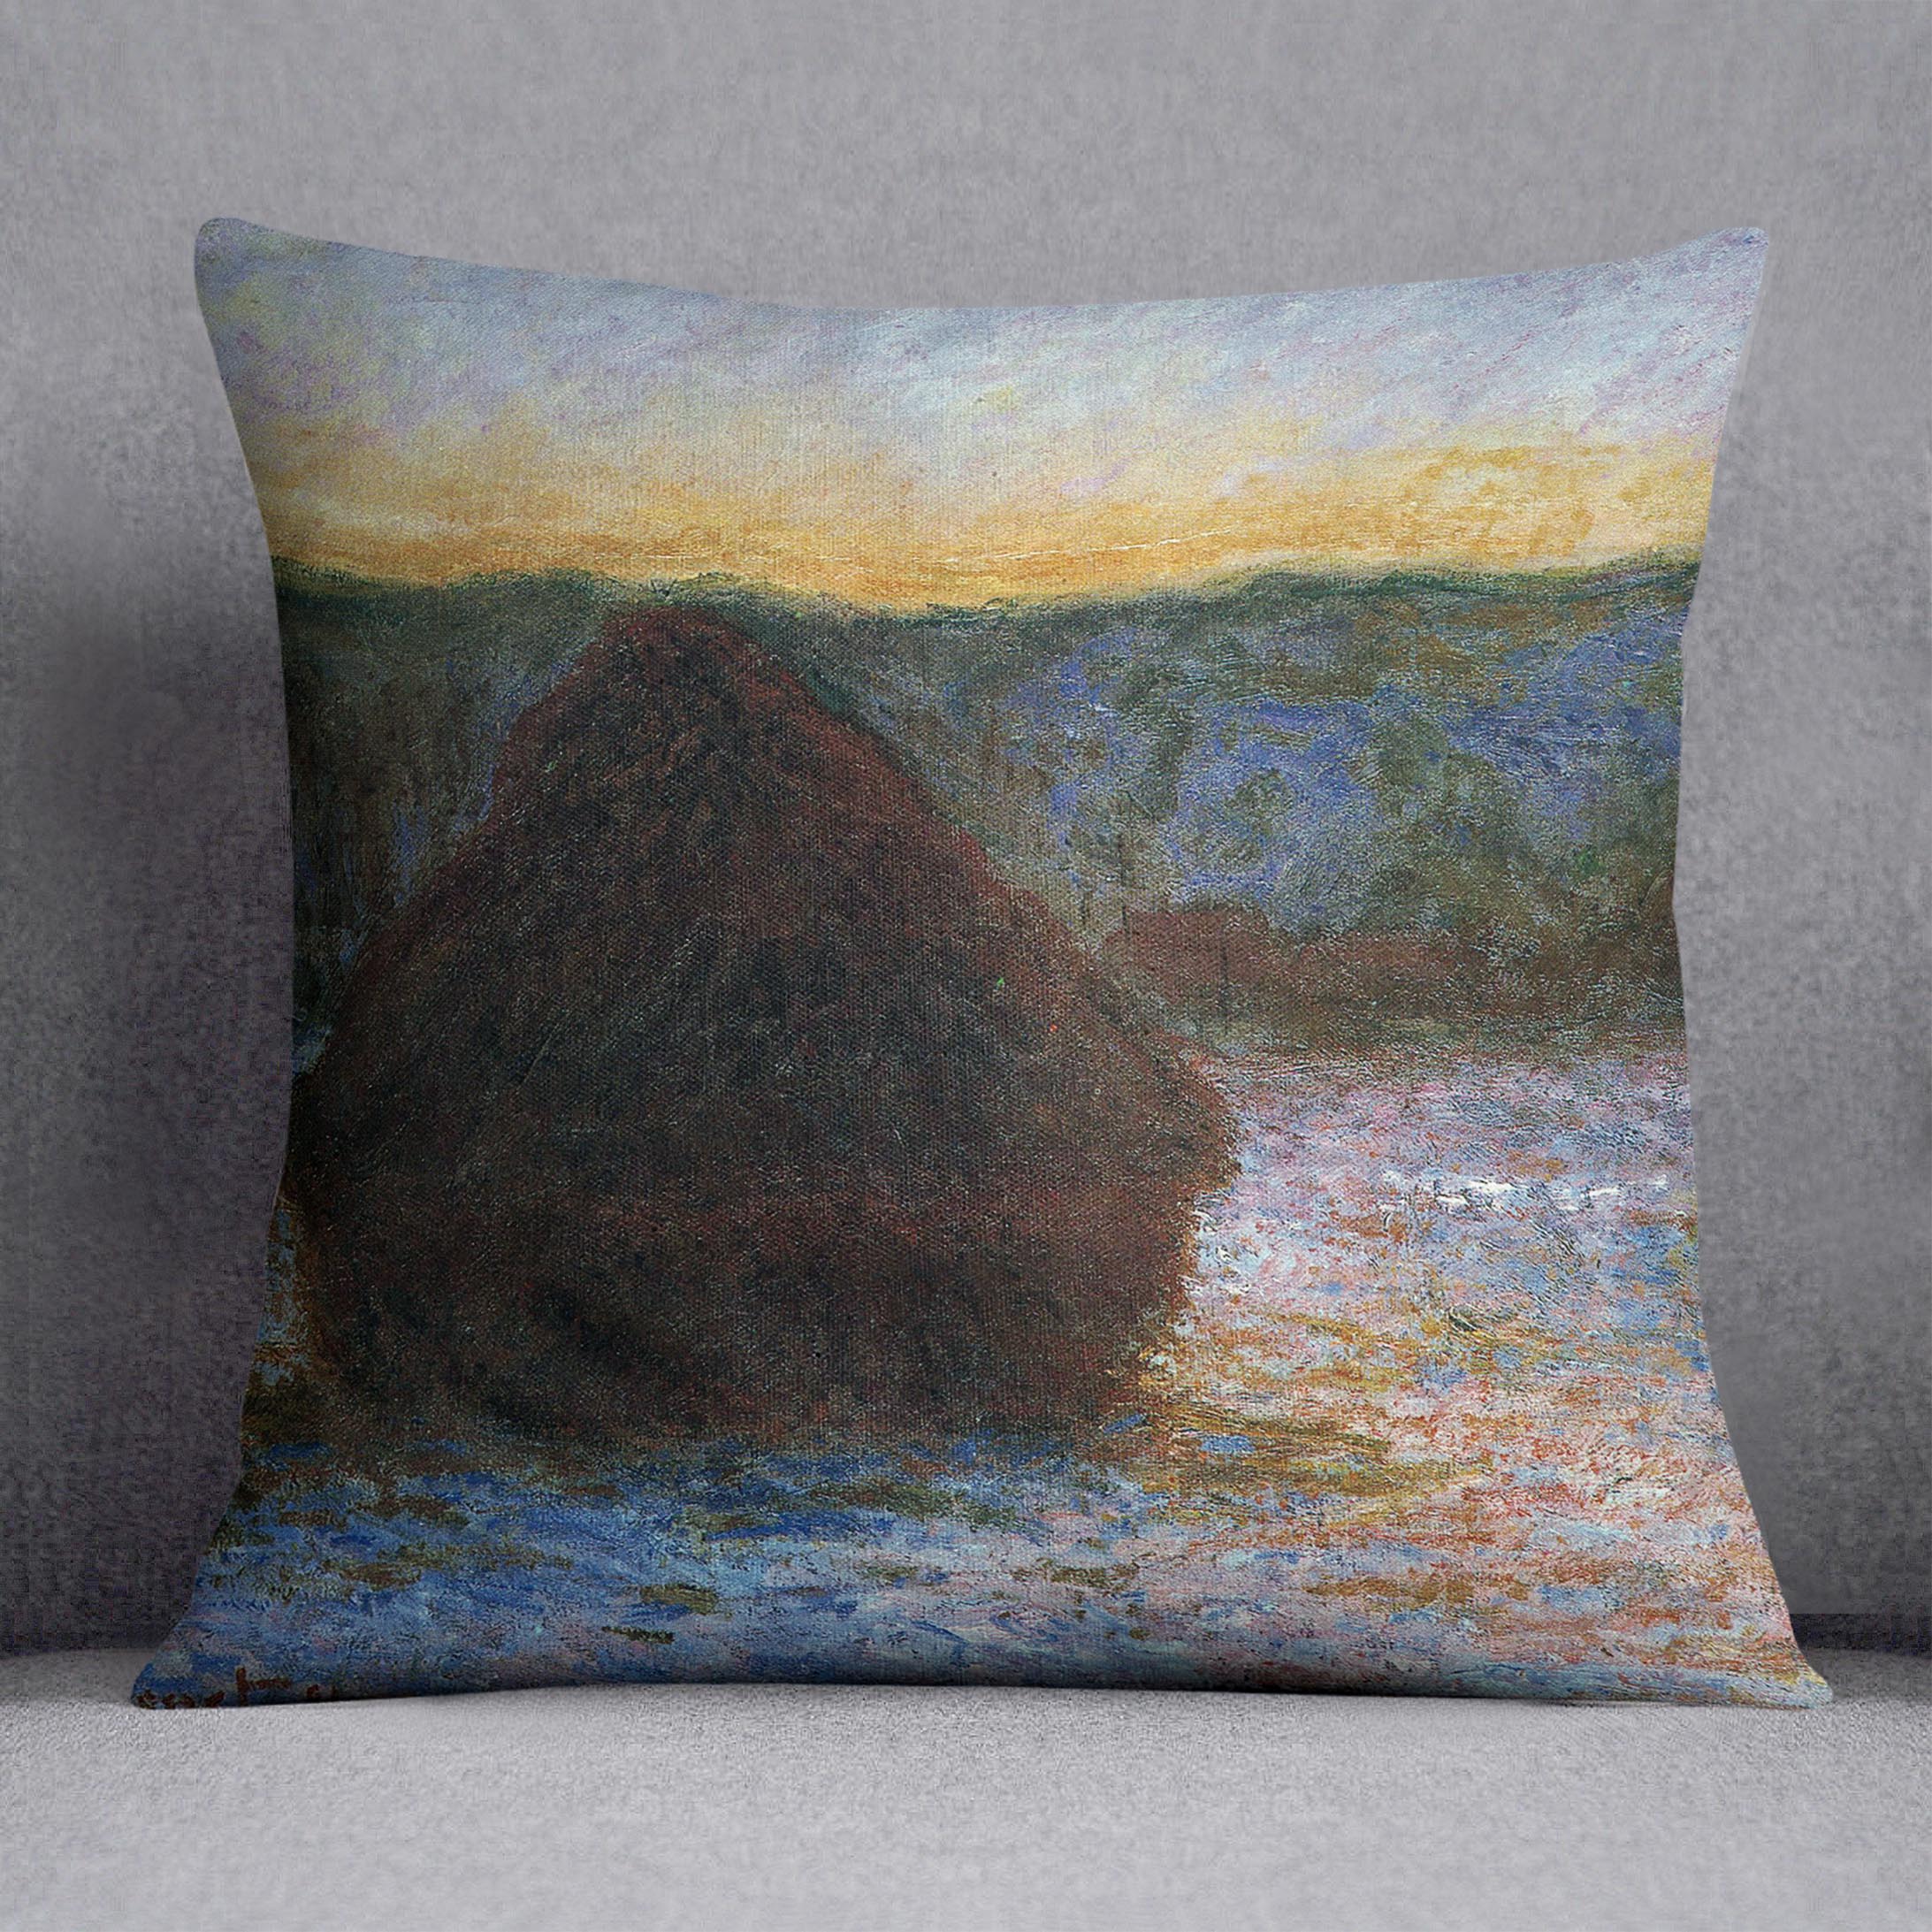 Haylofts thaw sunset by Monet Cushion